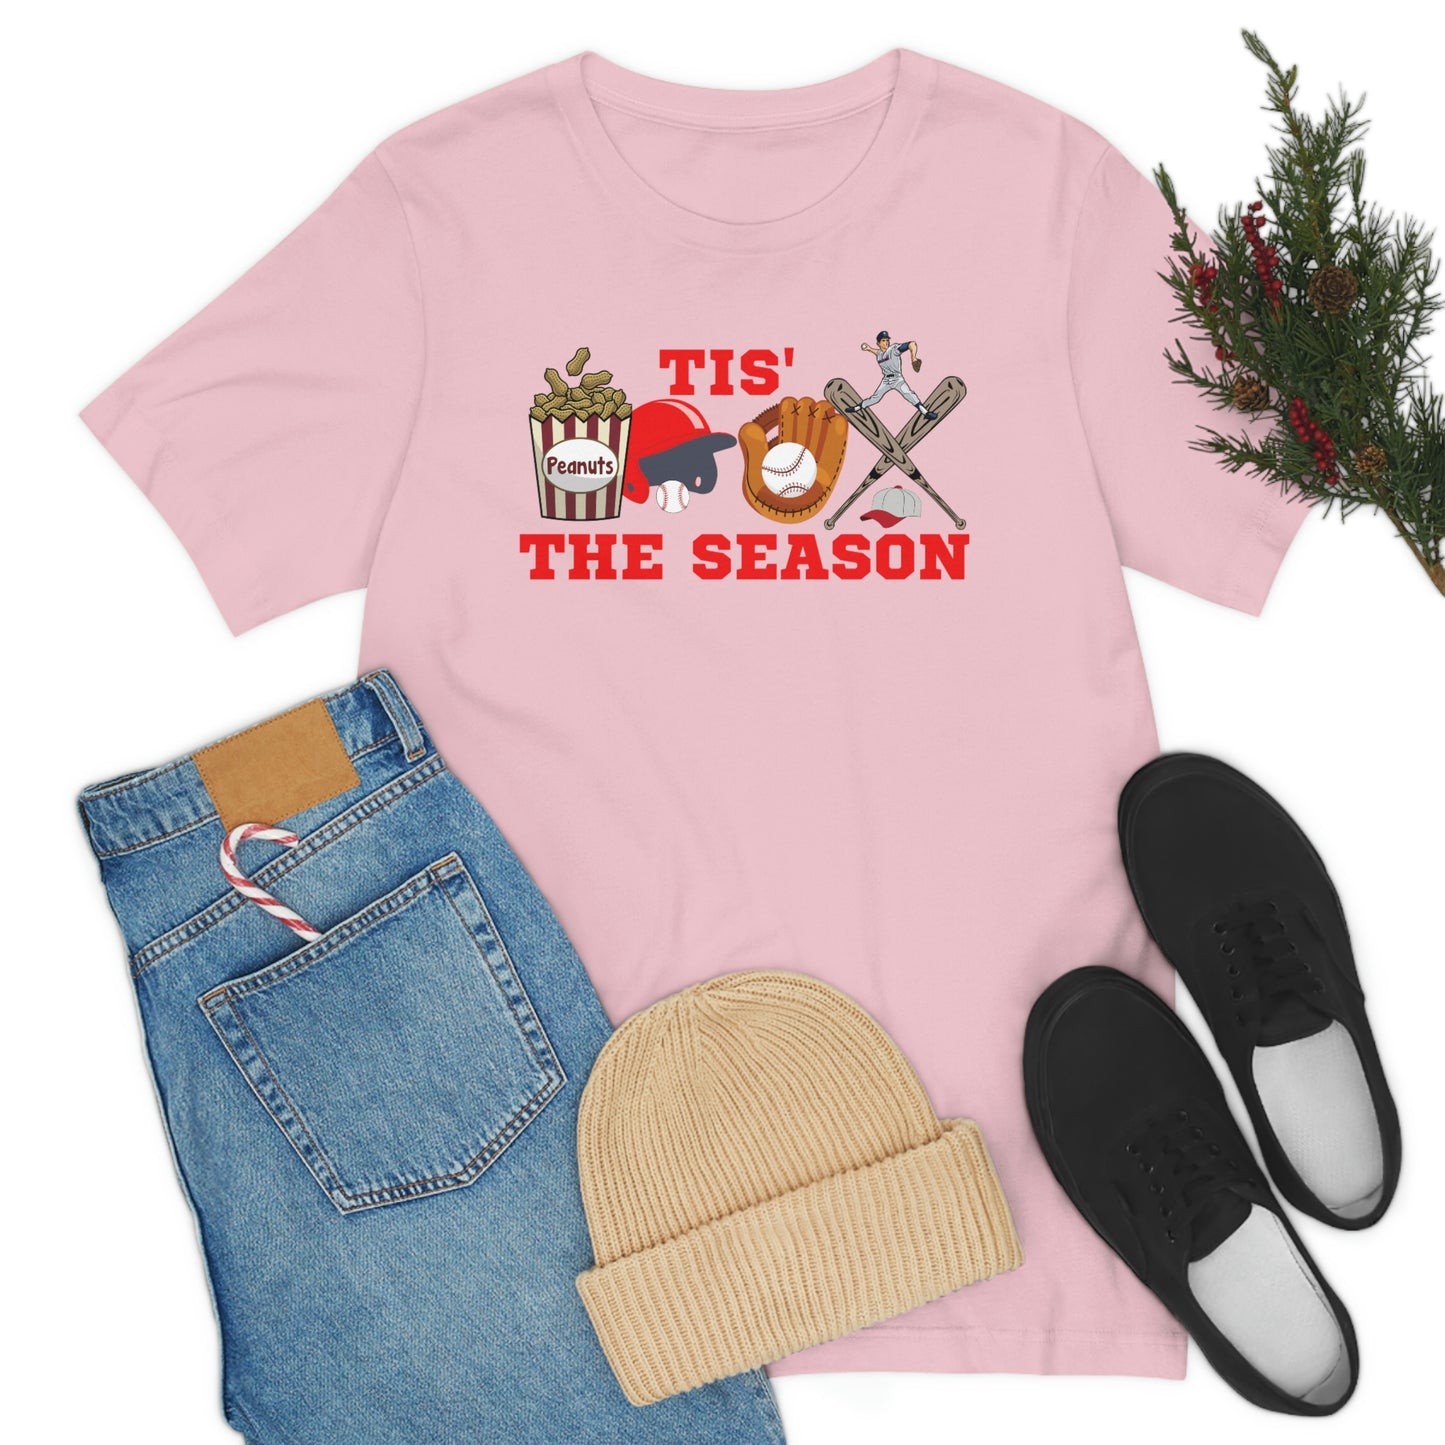 Tis the season Baseball shirt baseball tee baseball tshirt - sport shirt Baseball Mom shirt, Baseball Mama shirt, gift for him gameday shirt